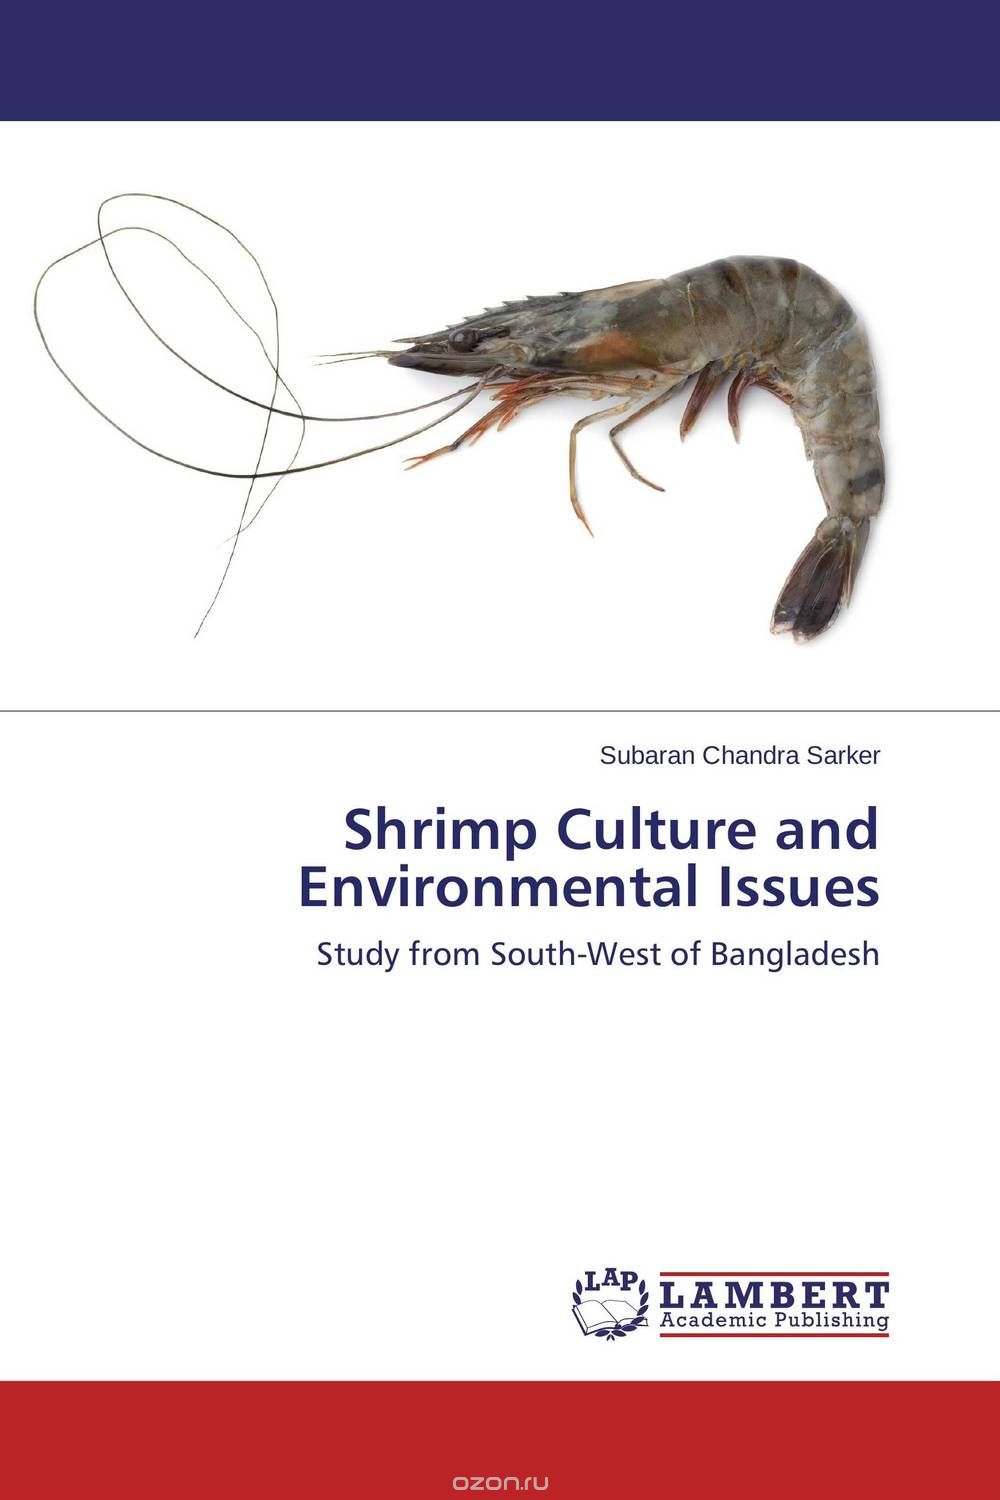 Скачать книгу "Shrimp Culture and Environmental Issues"